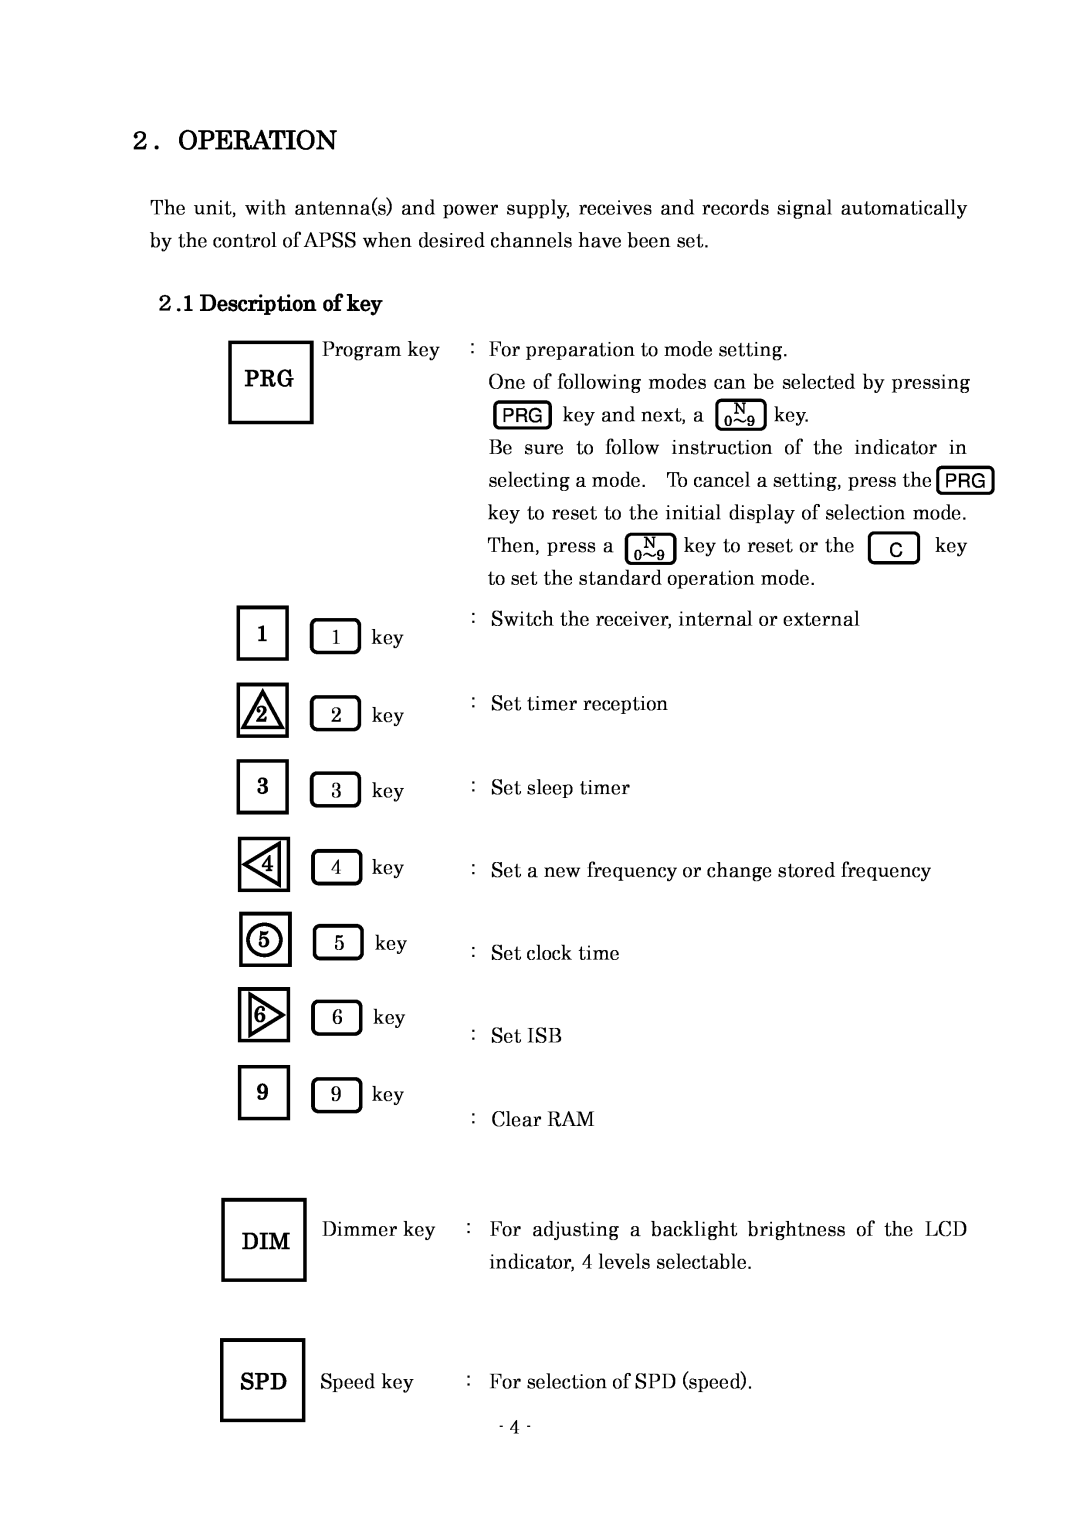 Furuno FAX-410 manual ２．OPERATION, Description of key 